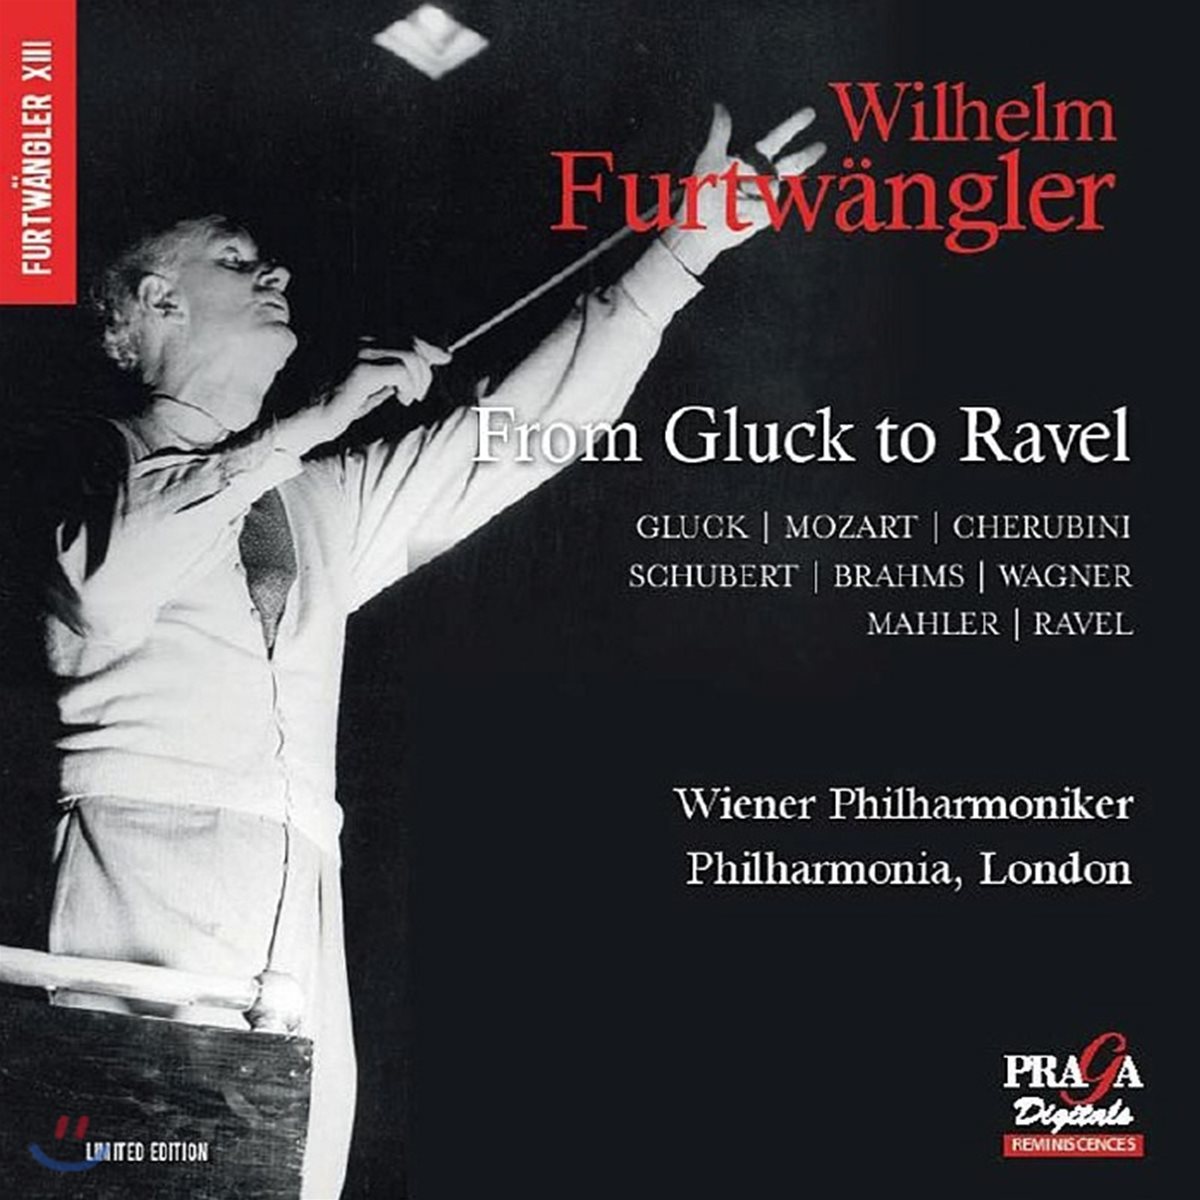 Wilhelm Furtwangler 글룩부터 라벨까지 (From Gluck to Ravel)